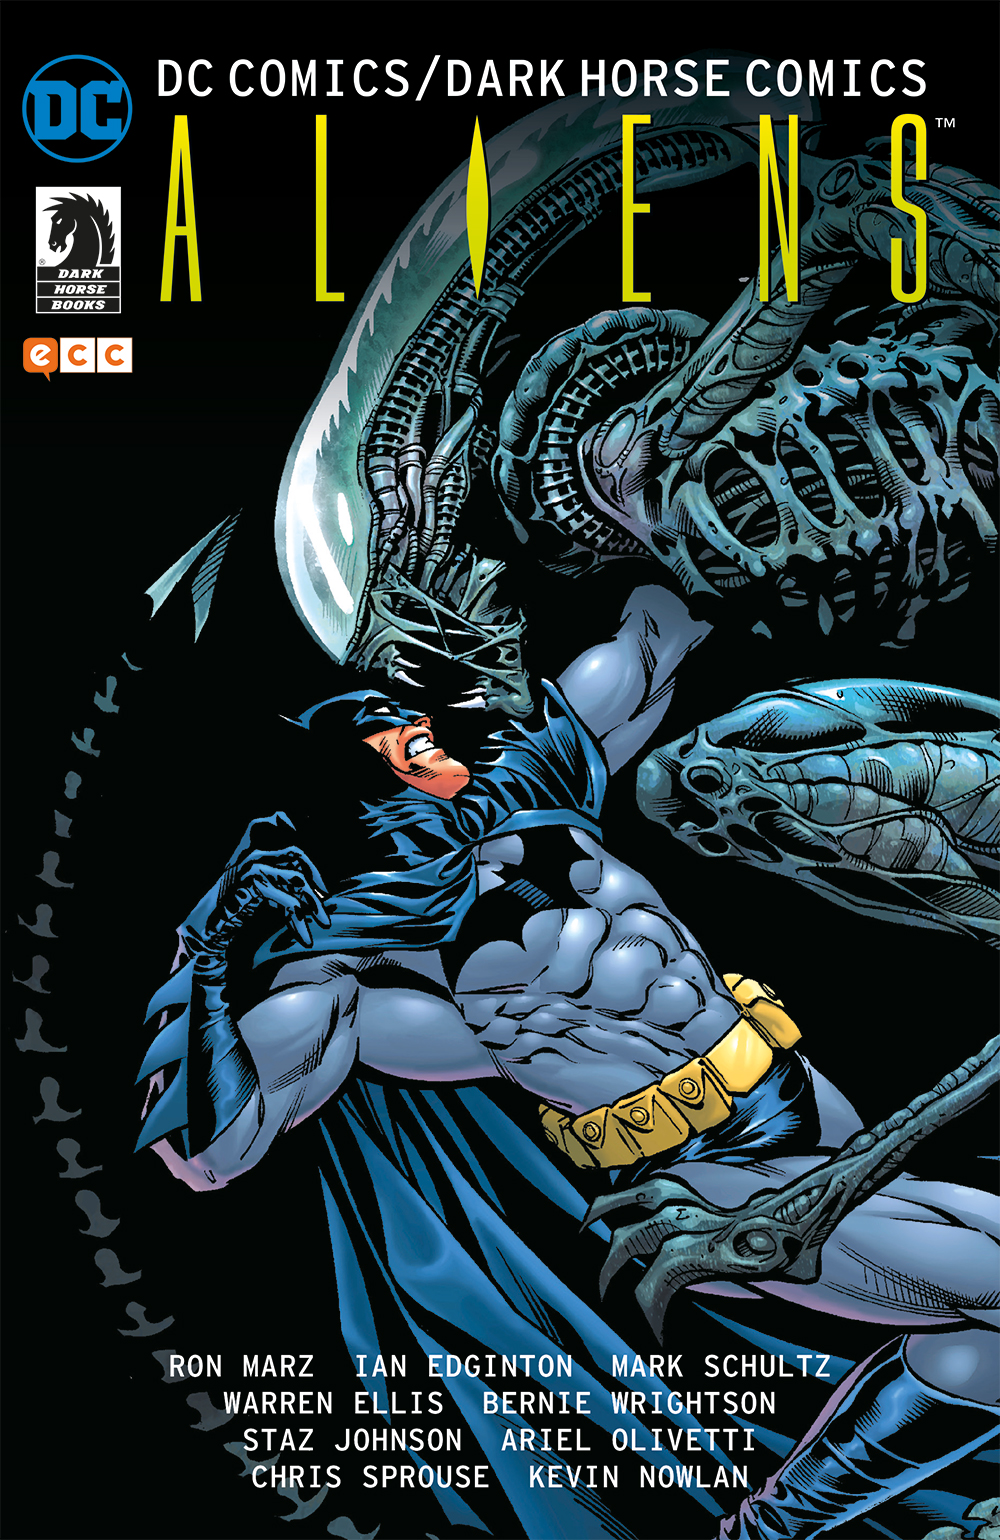 Leer Batman Aliens Comic Online en Español